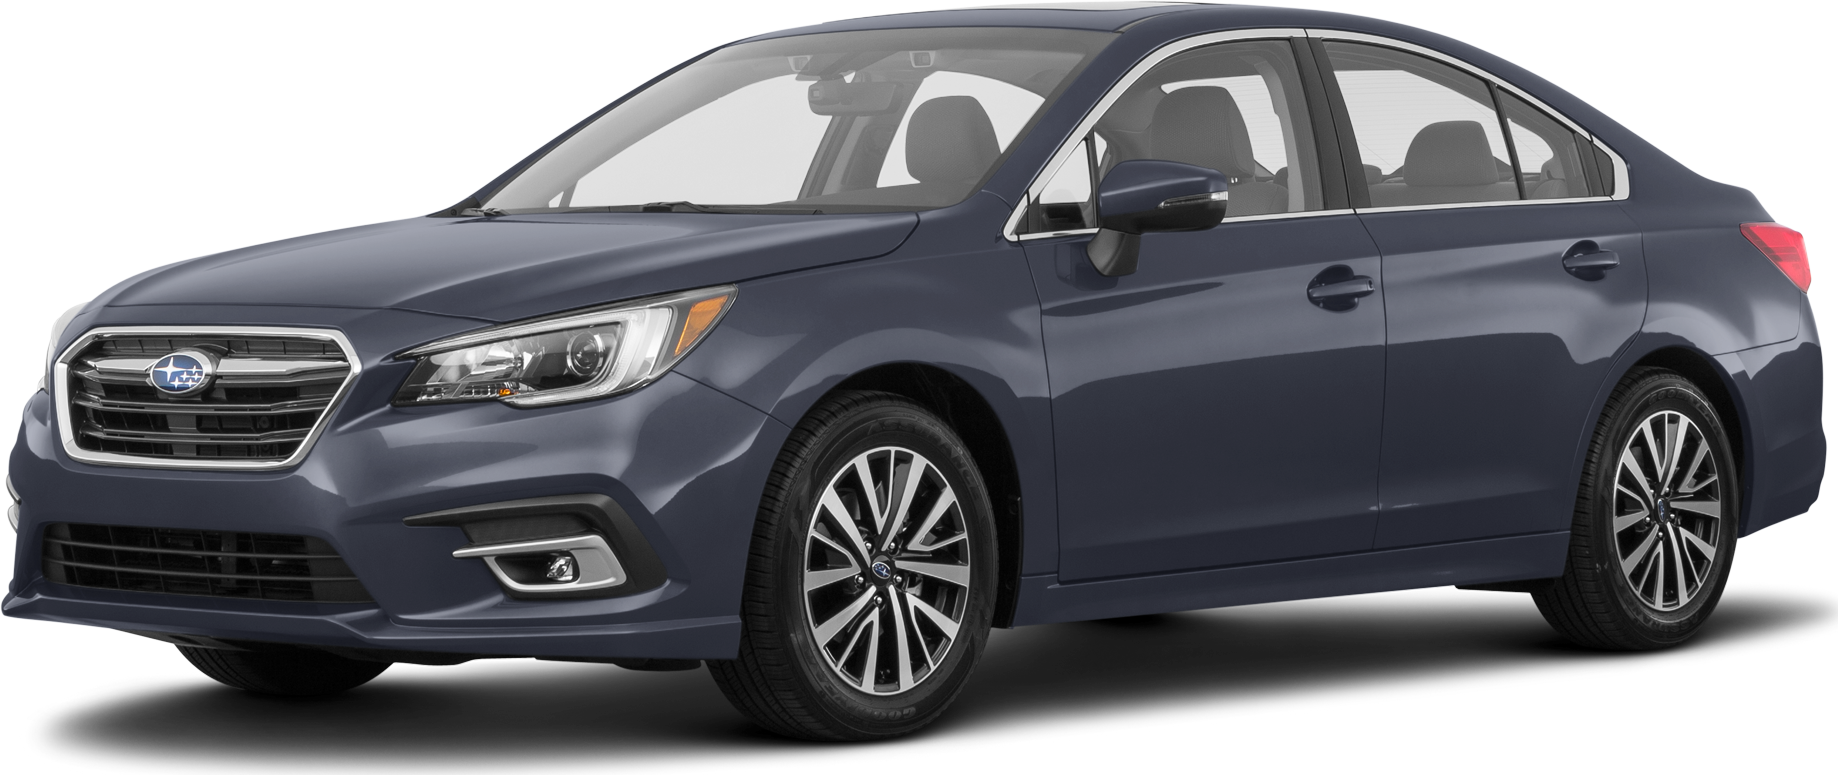 2018 Subaru Legacy Values & Cars for Sale | Kelley Blue Book